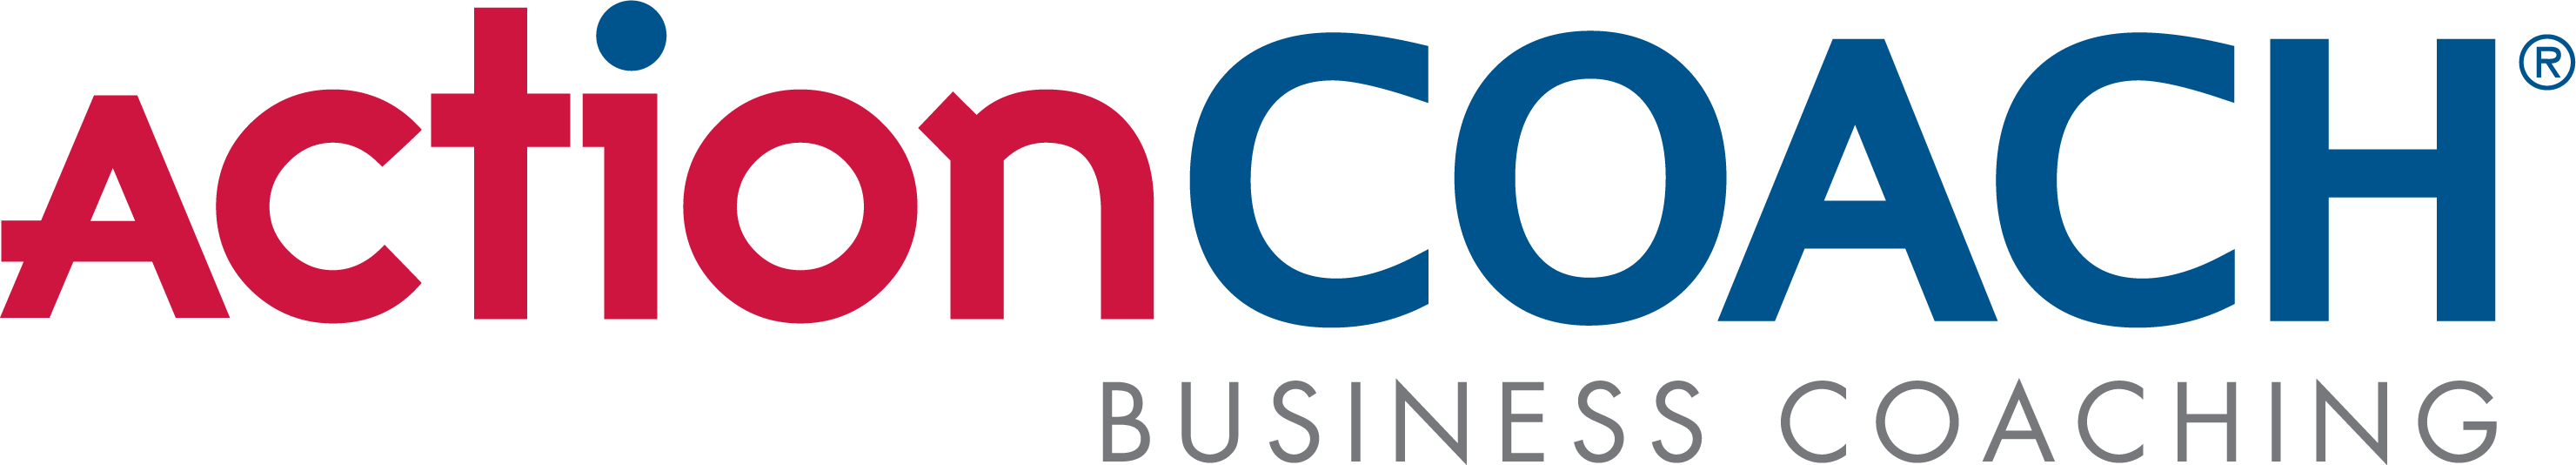 Actioncoach logo